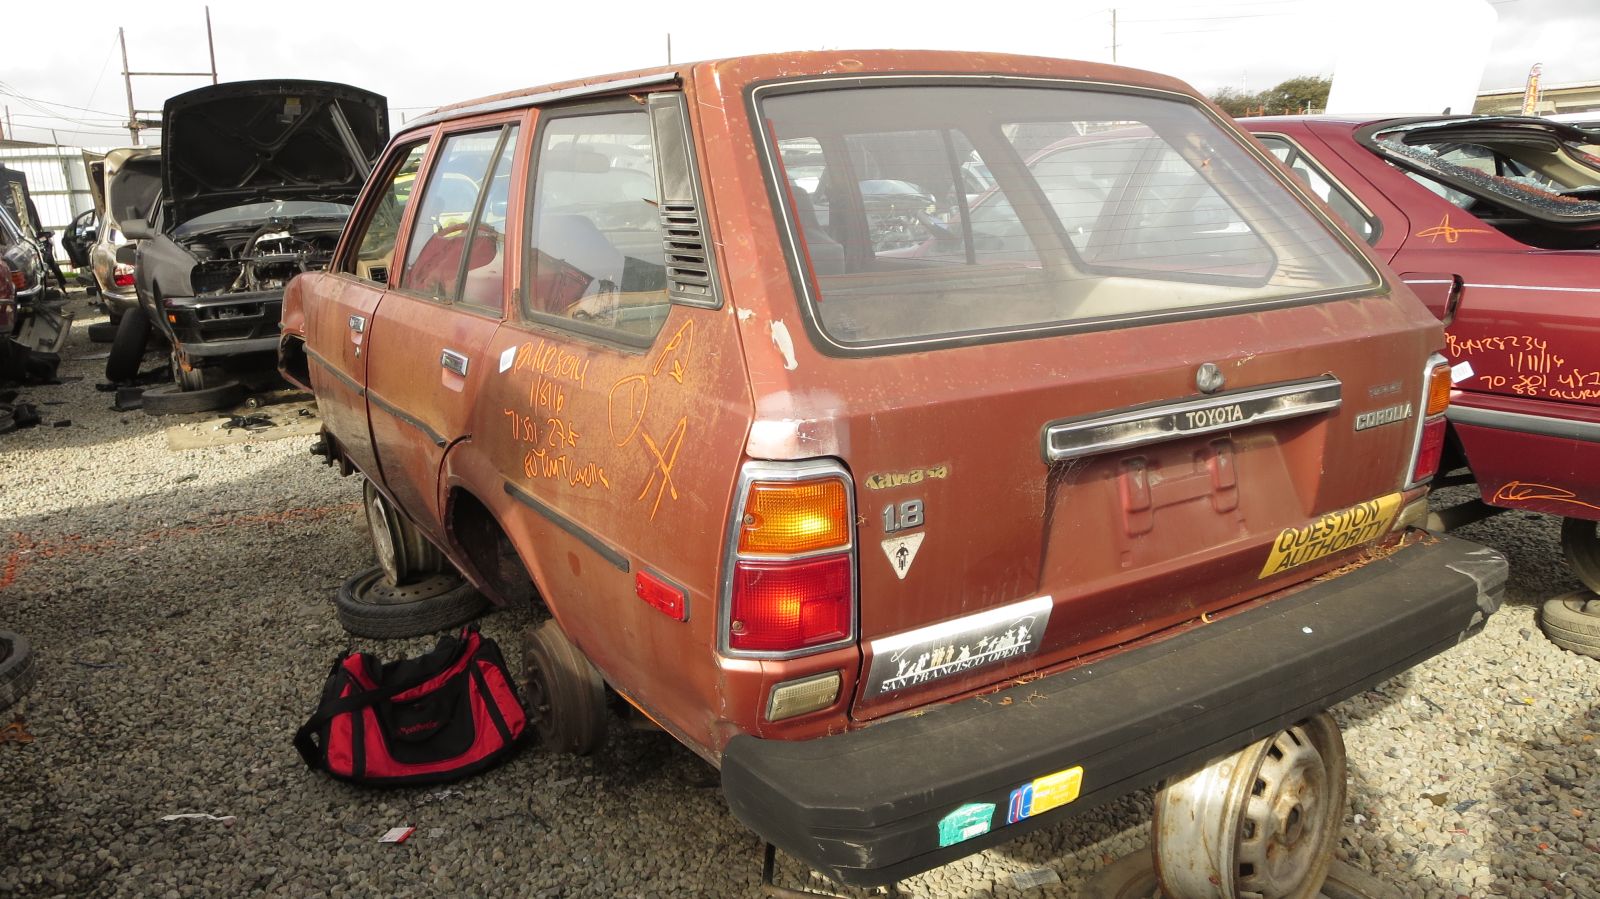 18 - 1980 Toyota Corolla wagon in California junkyard - photo by Murilee Martin